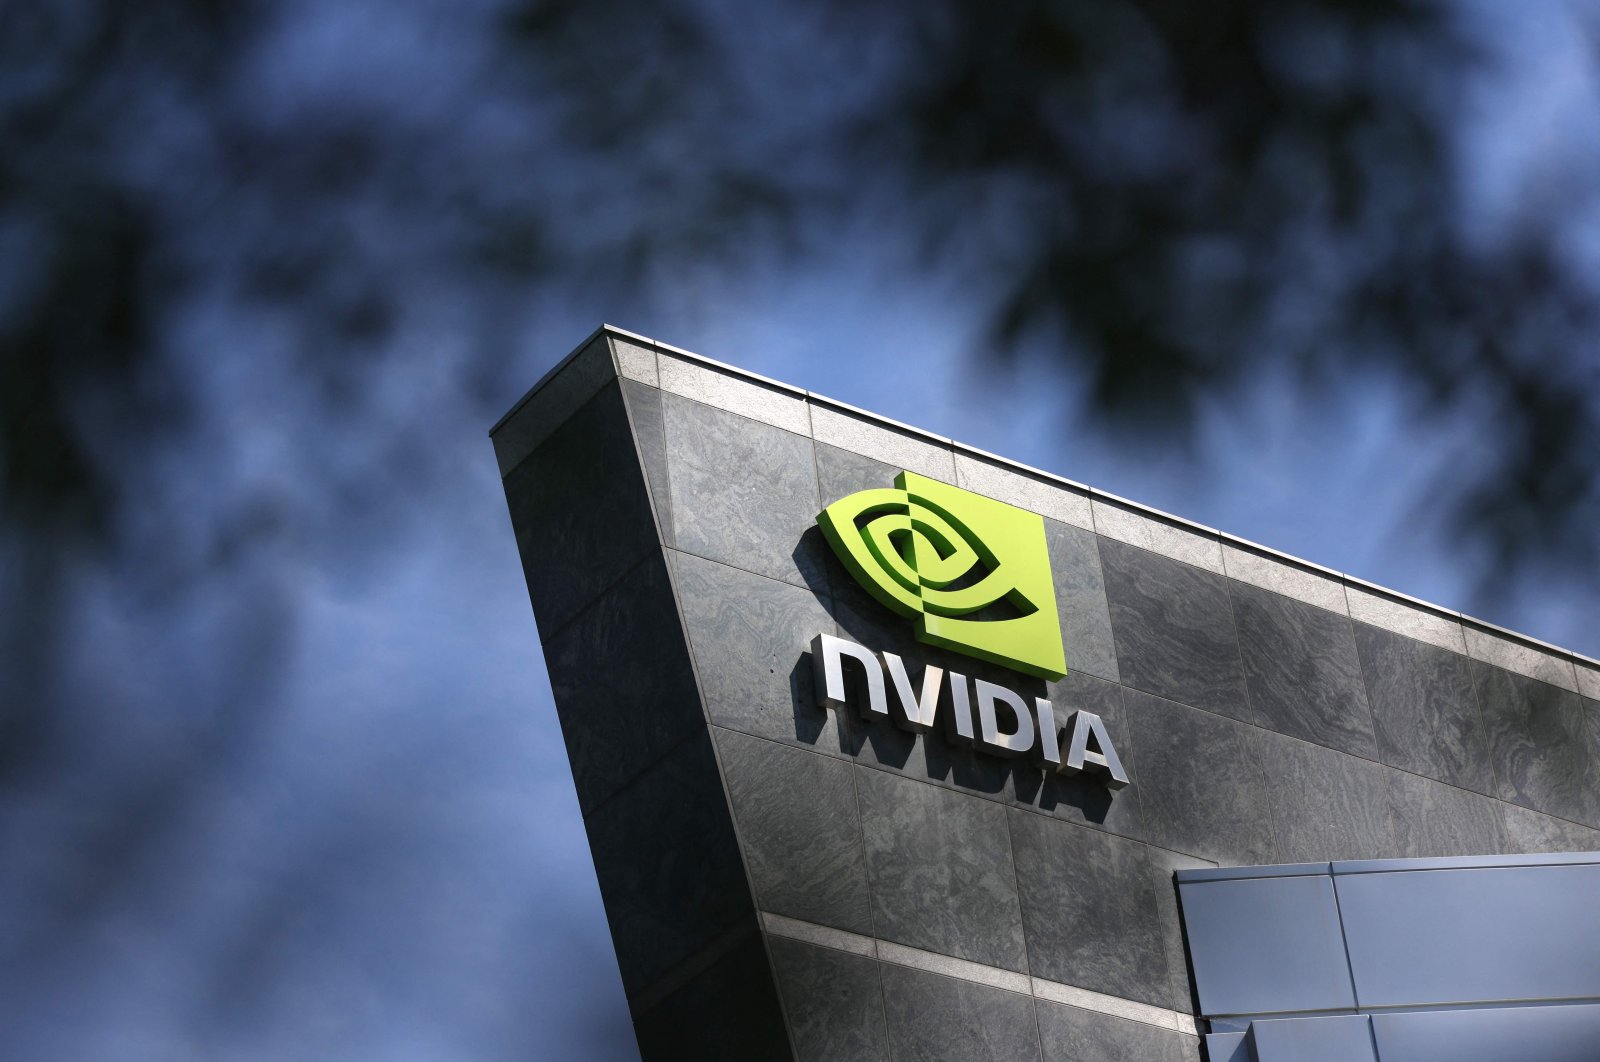 The Nvidia headquarters is seen in Santa Clara, California, U.S., May 25, 2022. (AFP Photo)